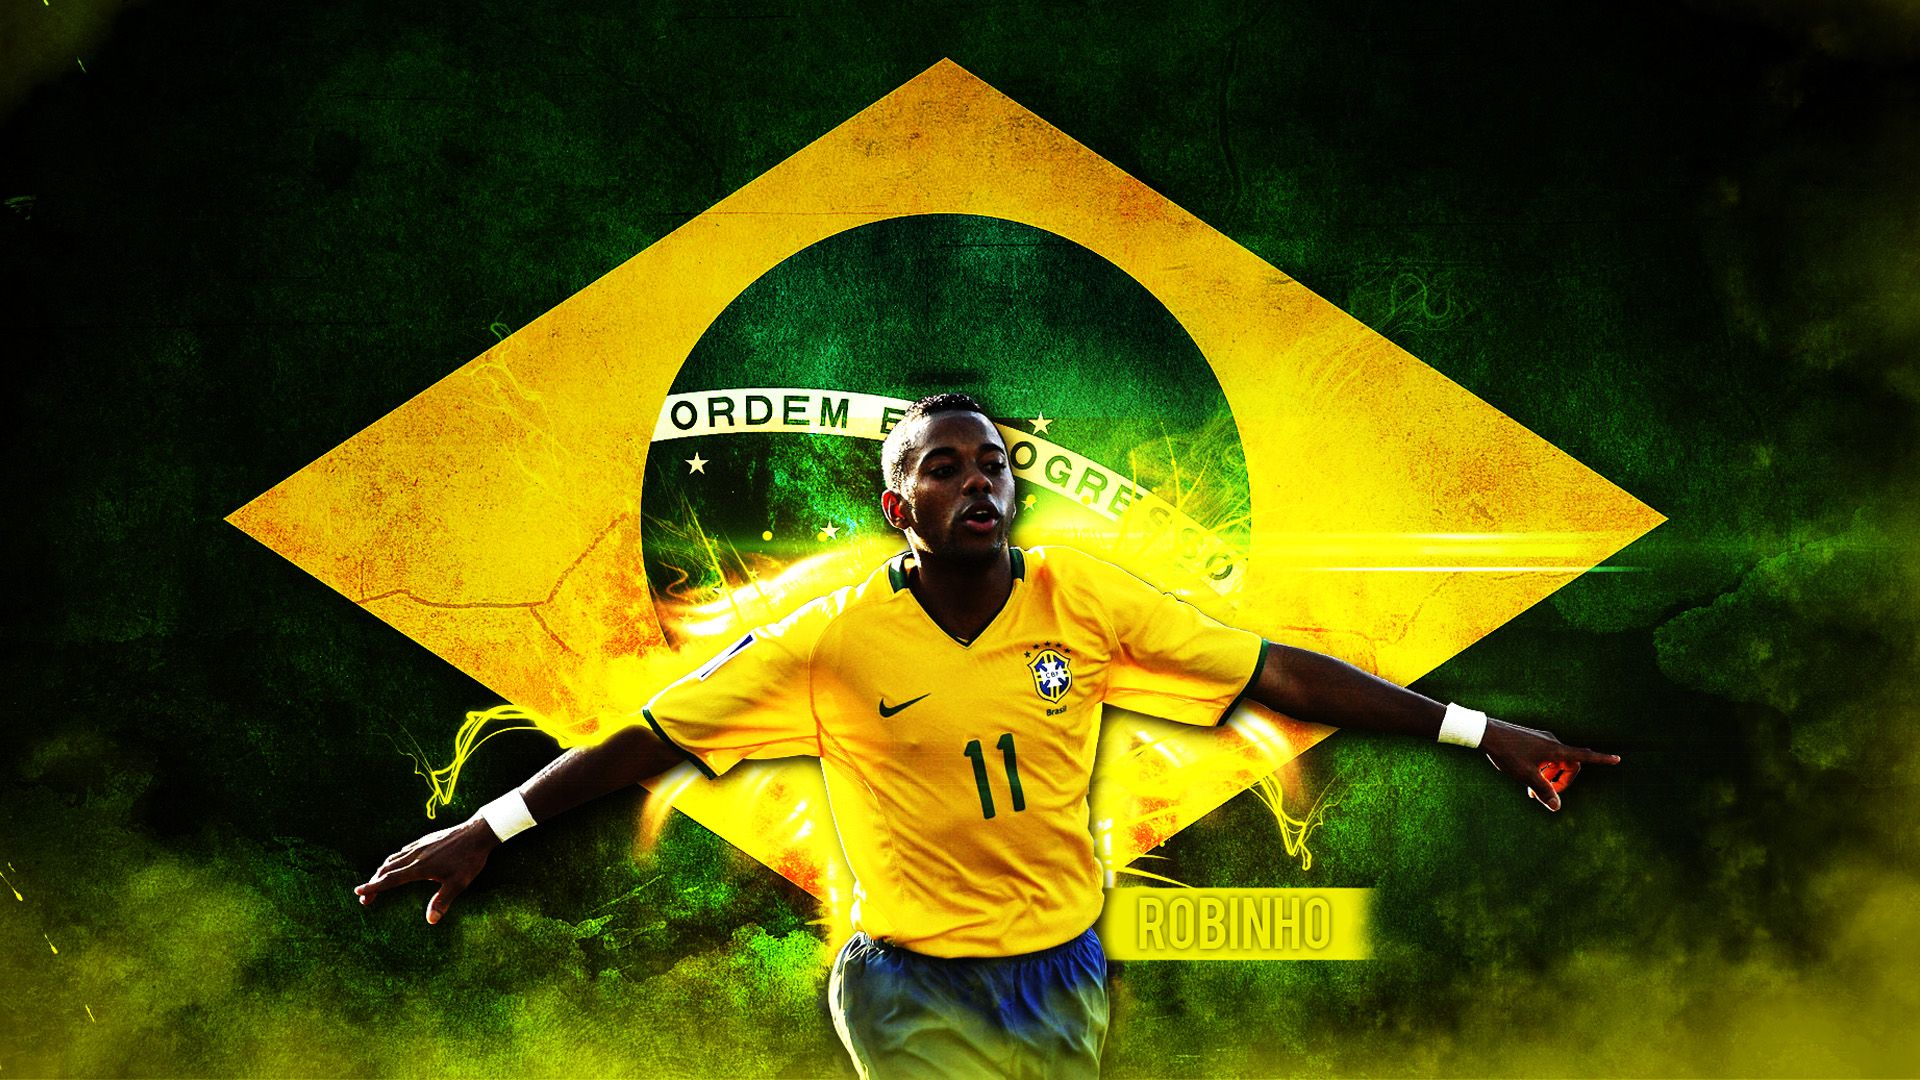 HD wallpaper, Soccer, Brazil, Wallpaper